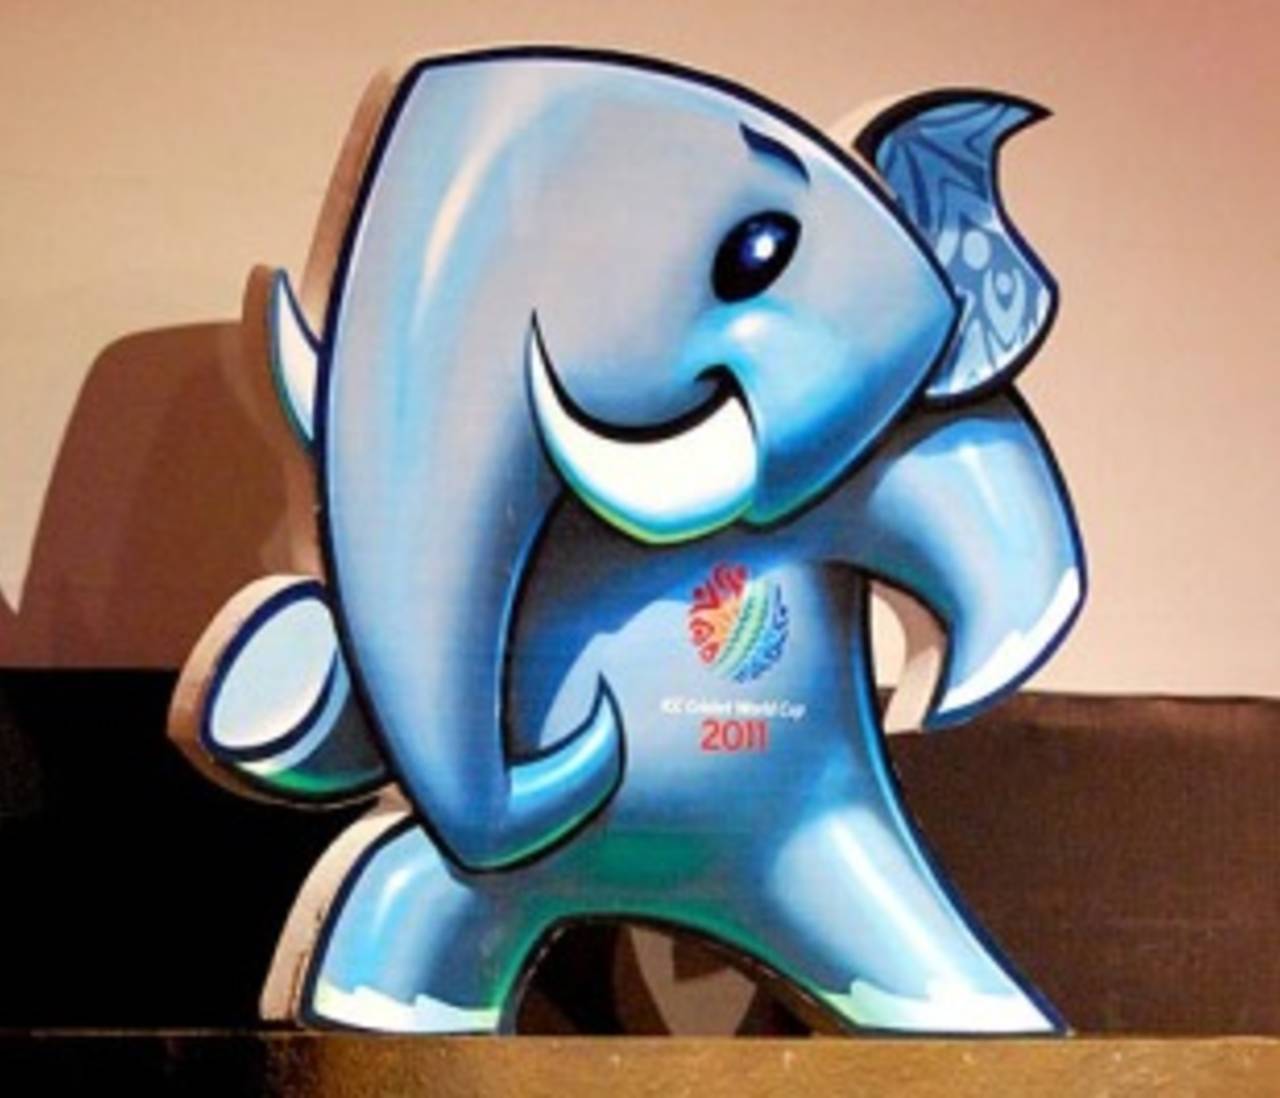 'Stumpy' the baby elephant is the mascot for the 2011 World Cup&nbsp;&nbsp;&bull;&nbsp;&nbsp;ESPNcricinfo Ltd